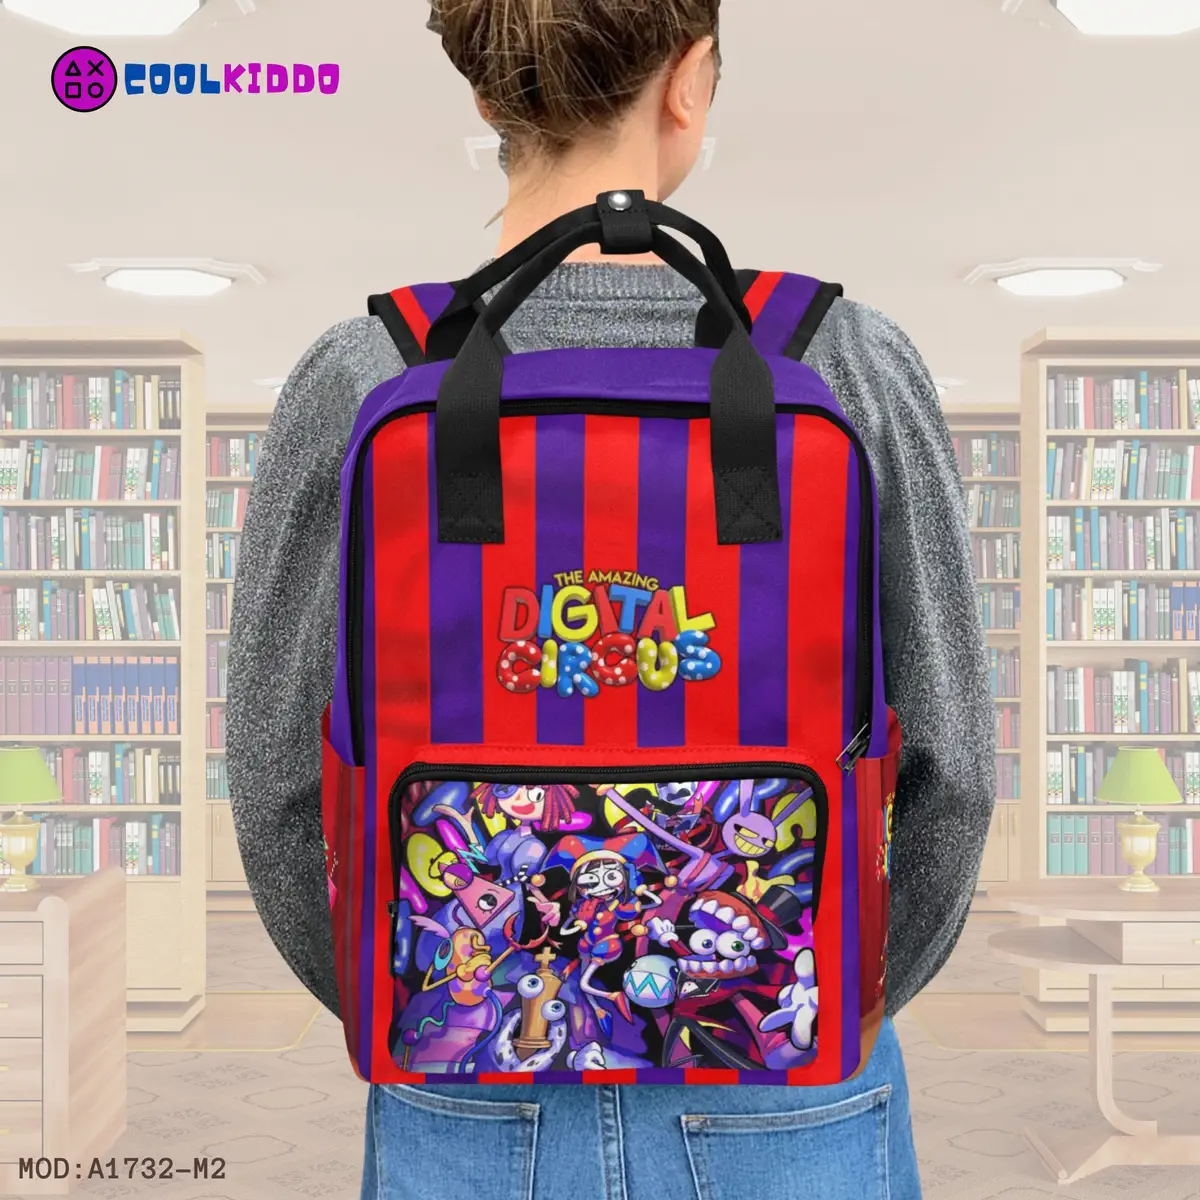 Amazing Digital Circus Handle Backpack. Book bag for Kids / Youth Cool Kiddo 20